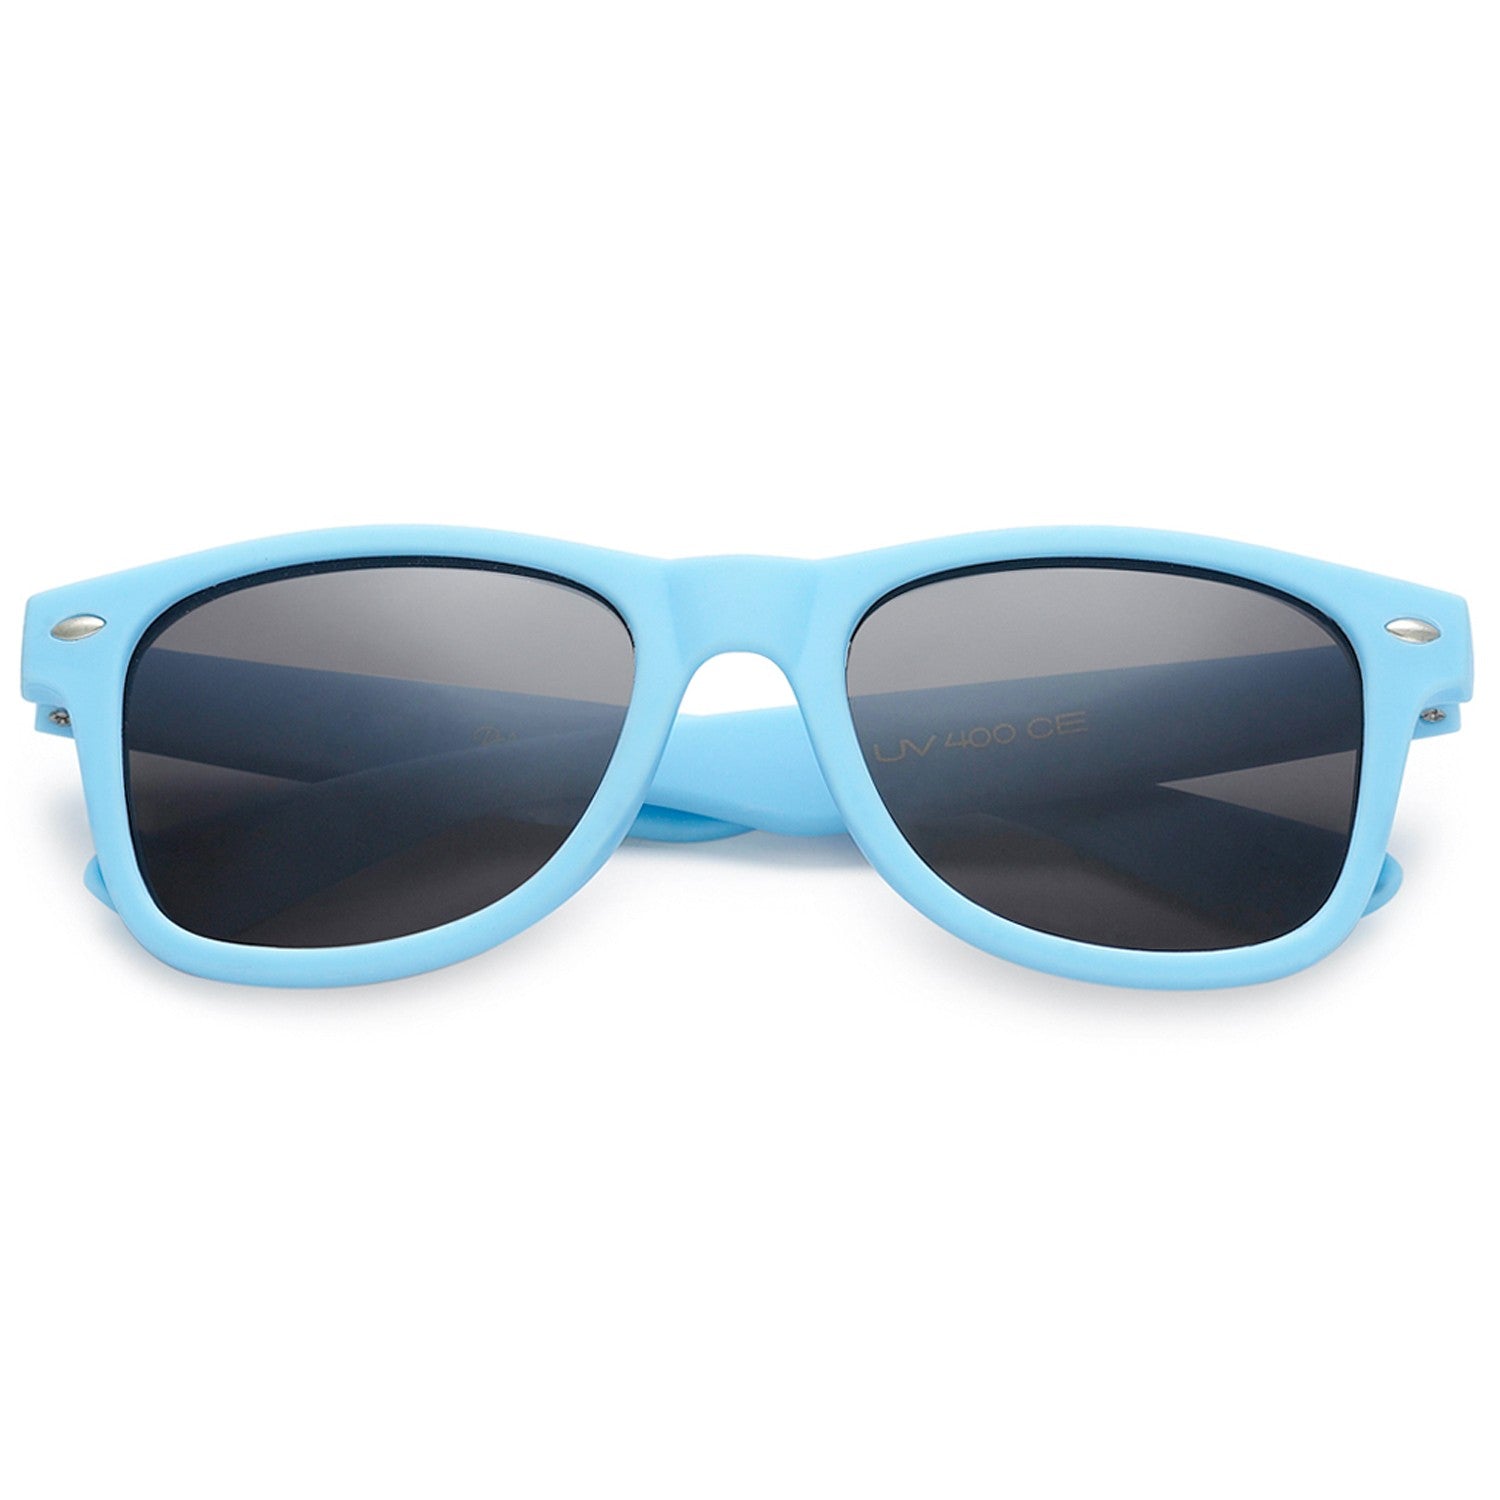 Polarspex Polarized 80's Retro Style Kids Sunglasses with Rubberized Carolina Blue Frames and Polarized Smoke Lenses for Boys and Girls